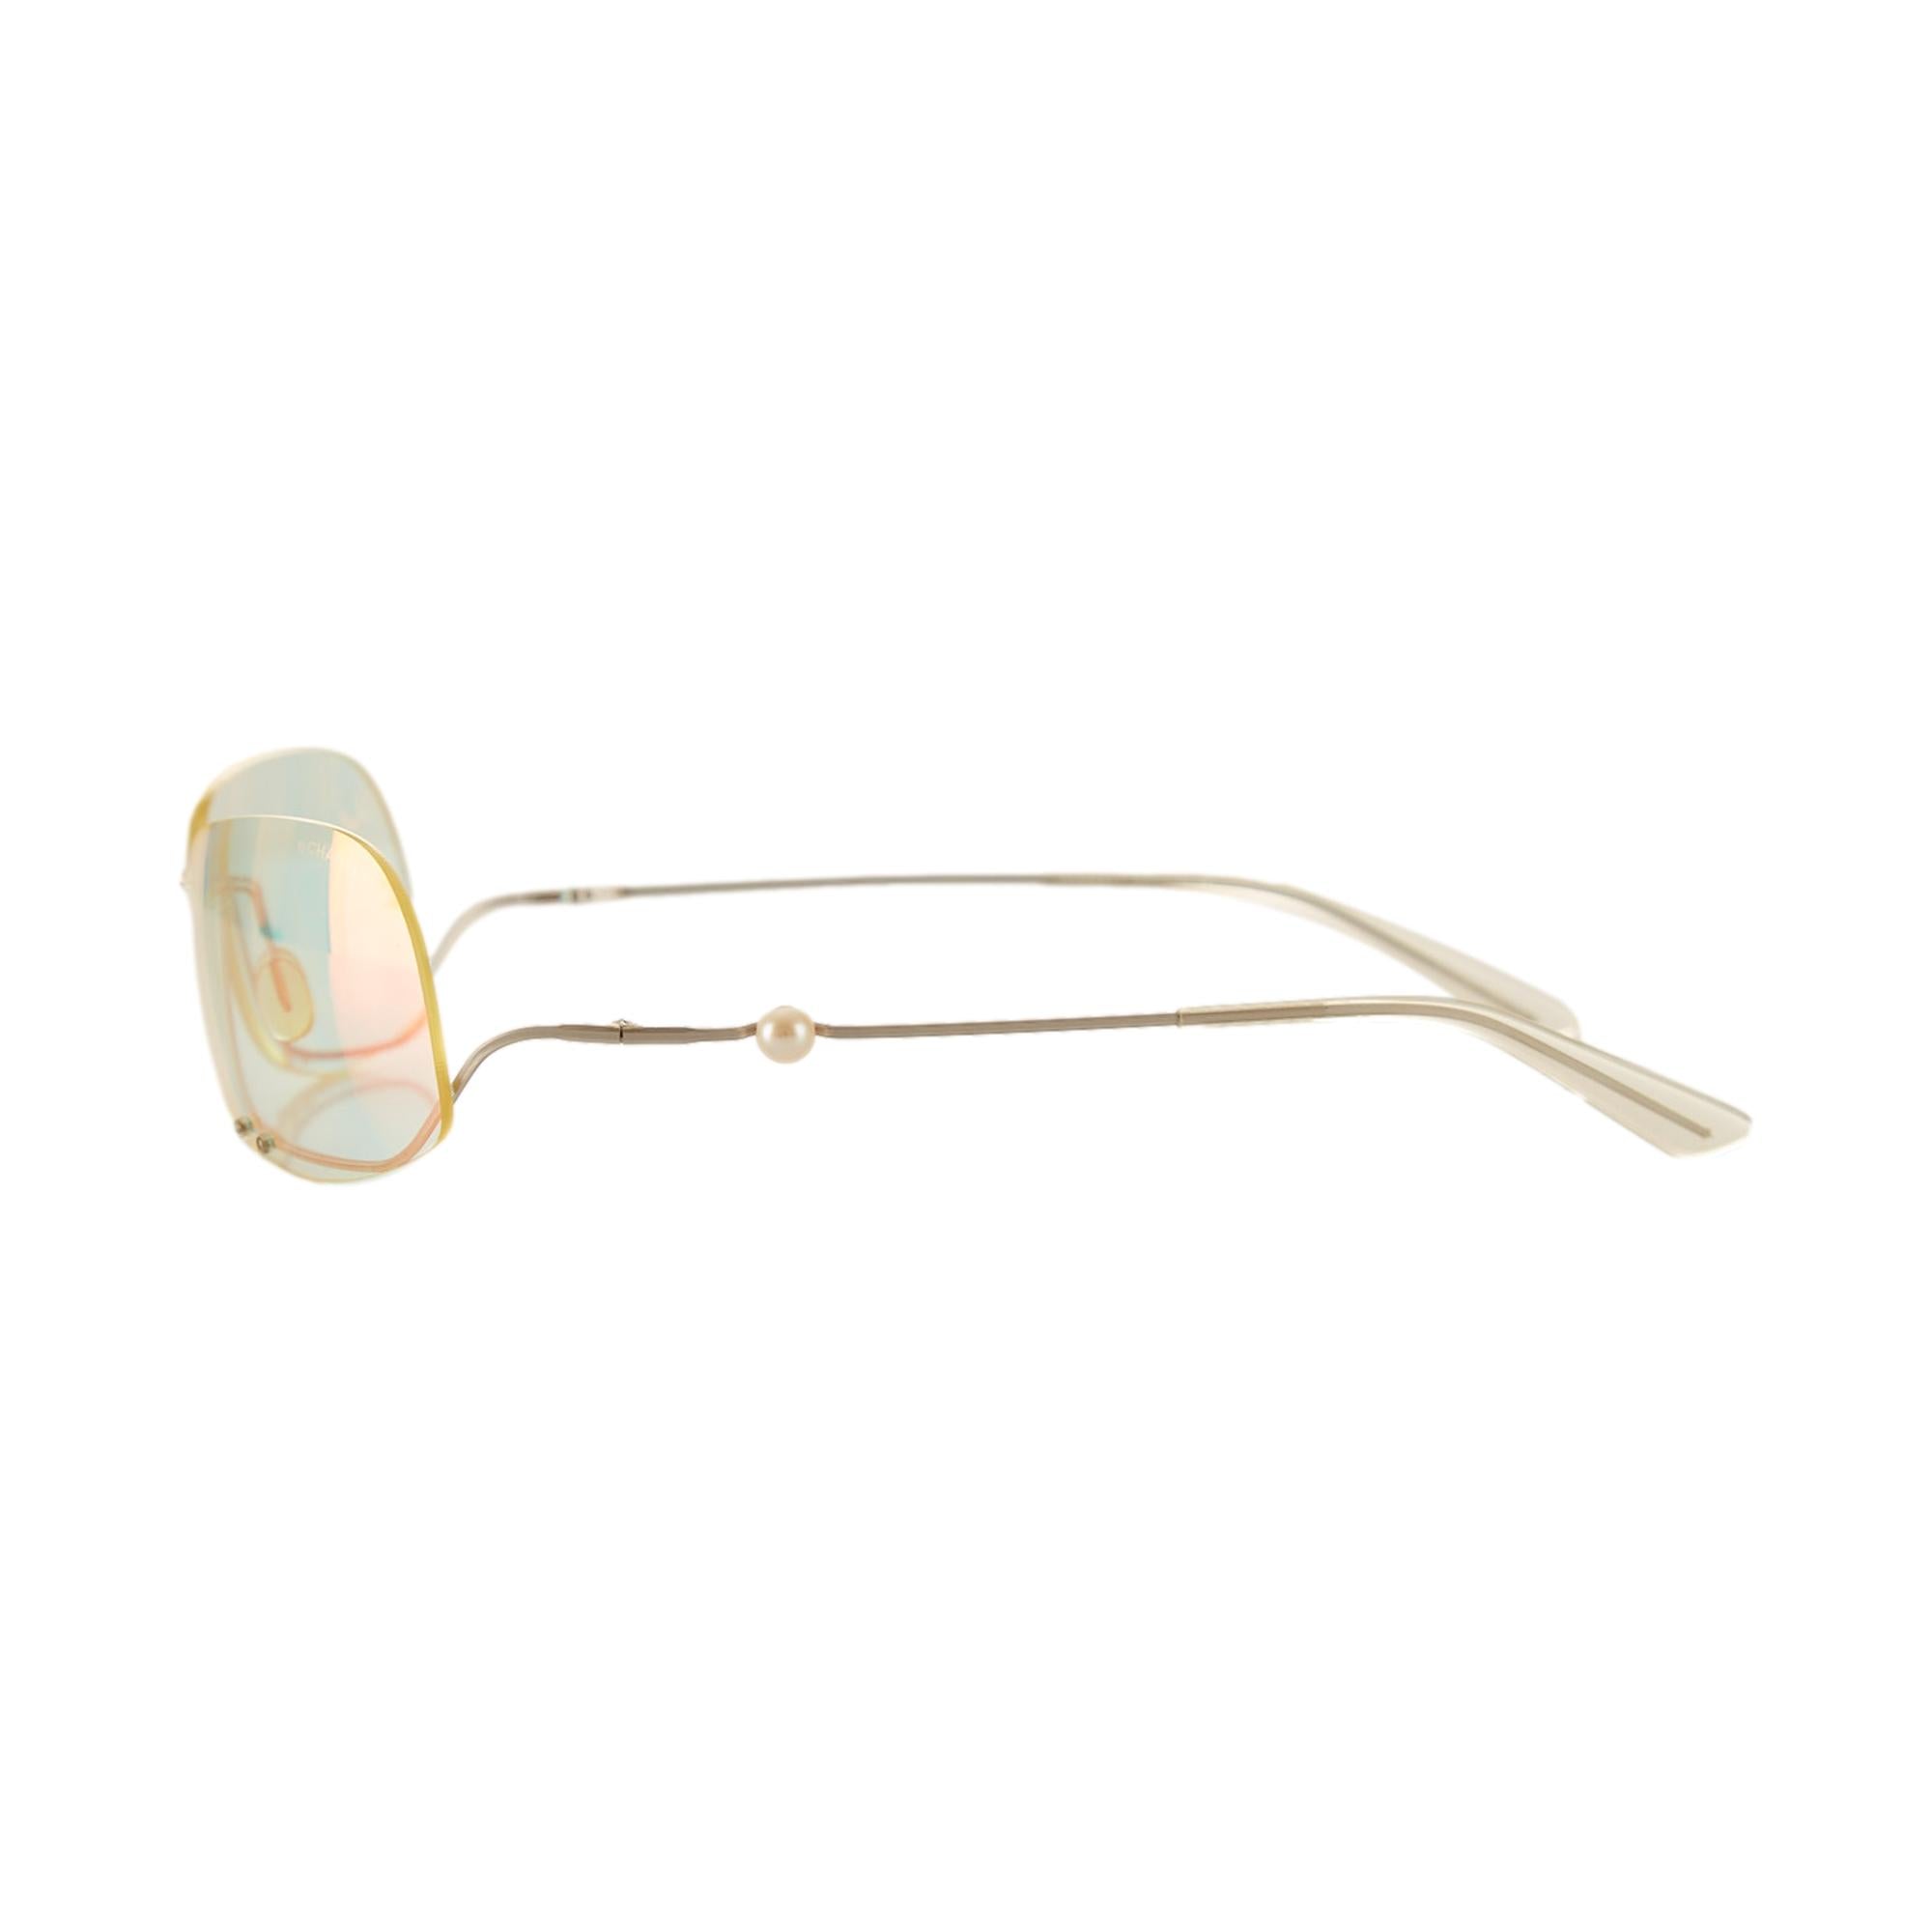 Chanel Iridescent Rimless Pearl Sunglasses